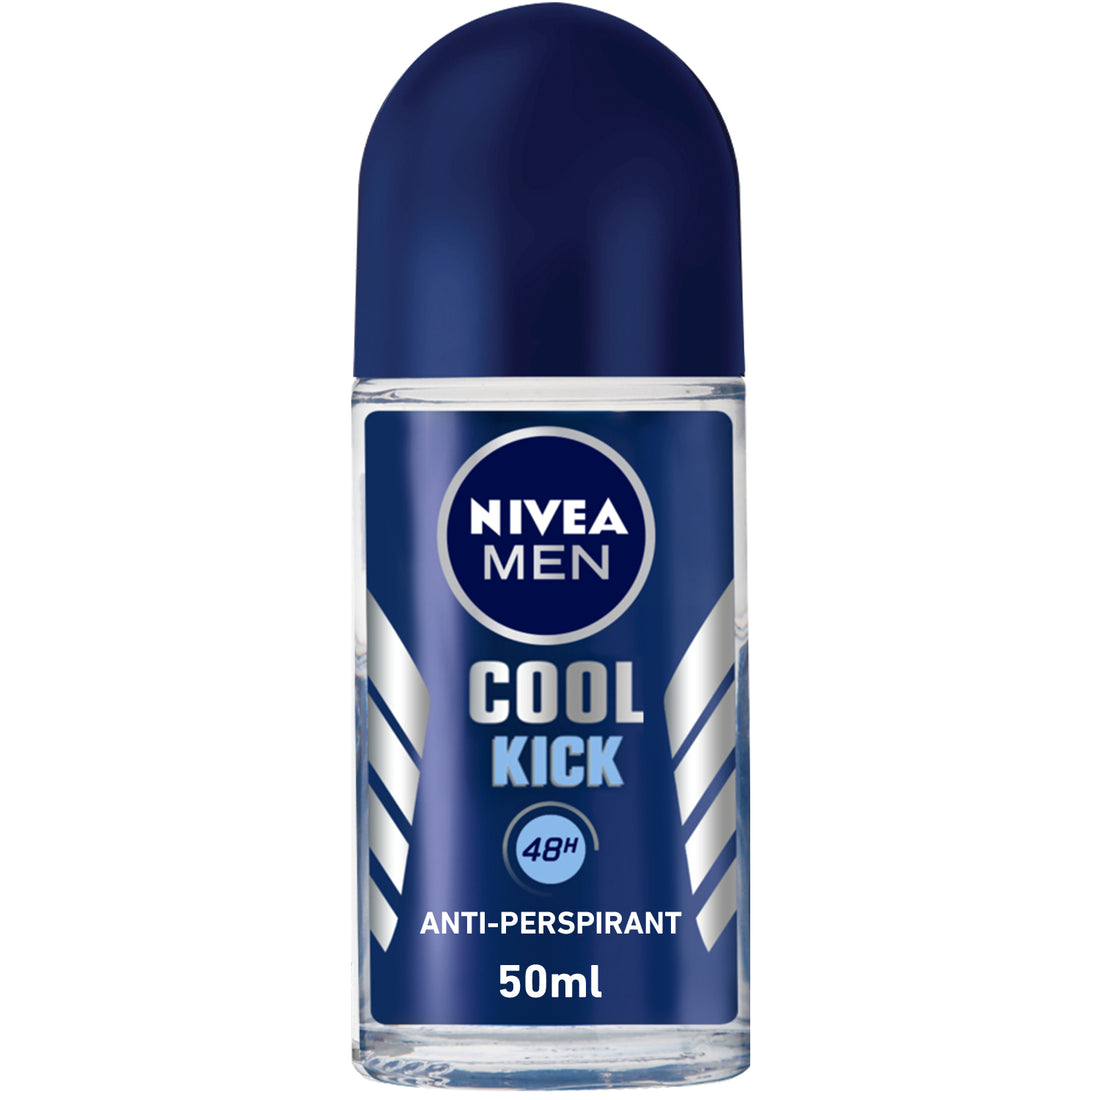 Nivea Men Cool Kick, Deodorant for Men, Fresh Scent, Roll-on 50ml